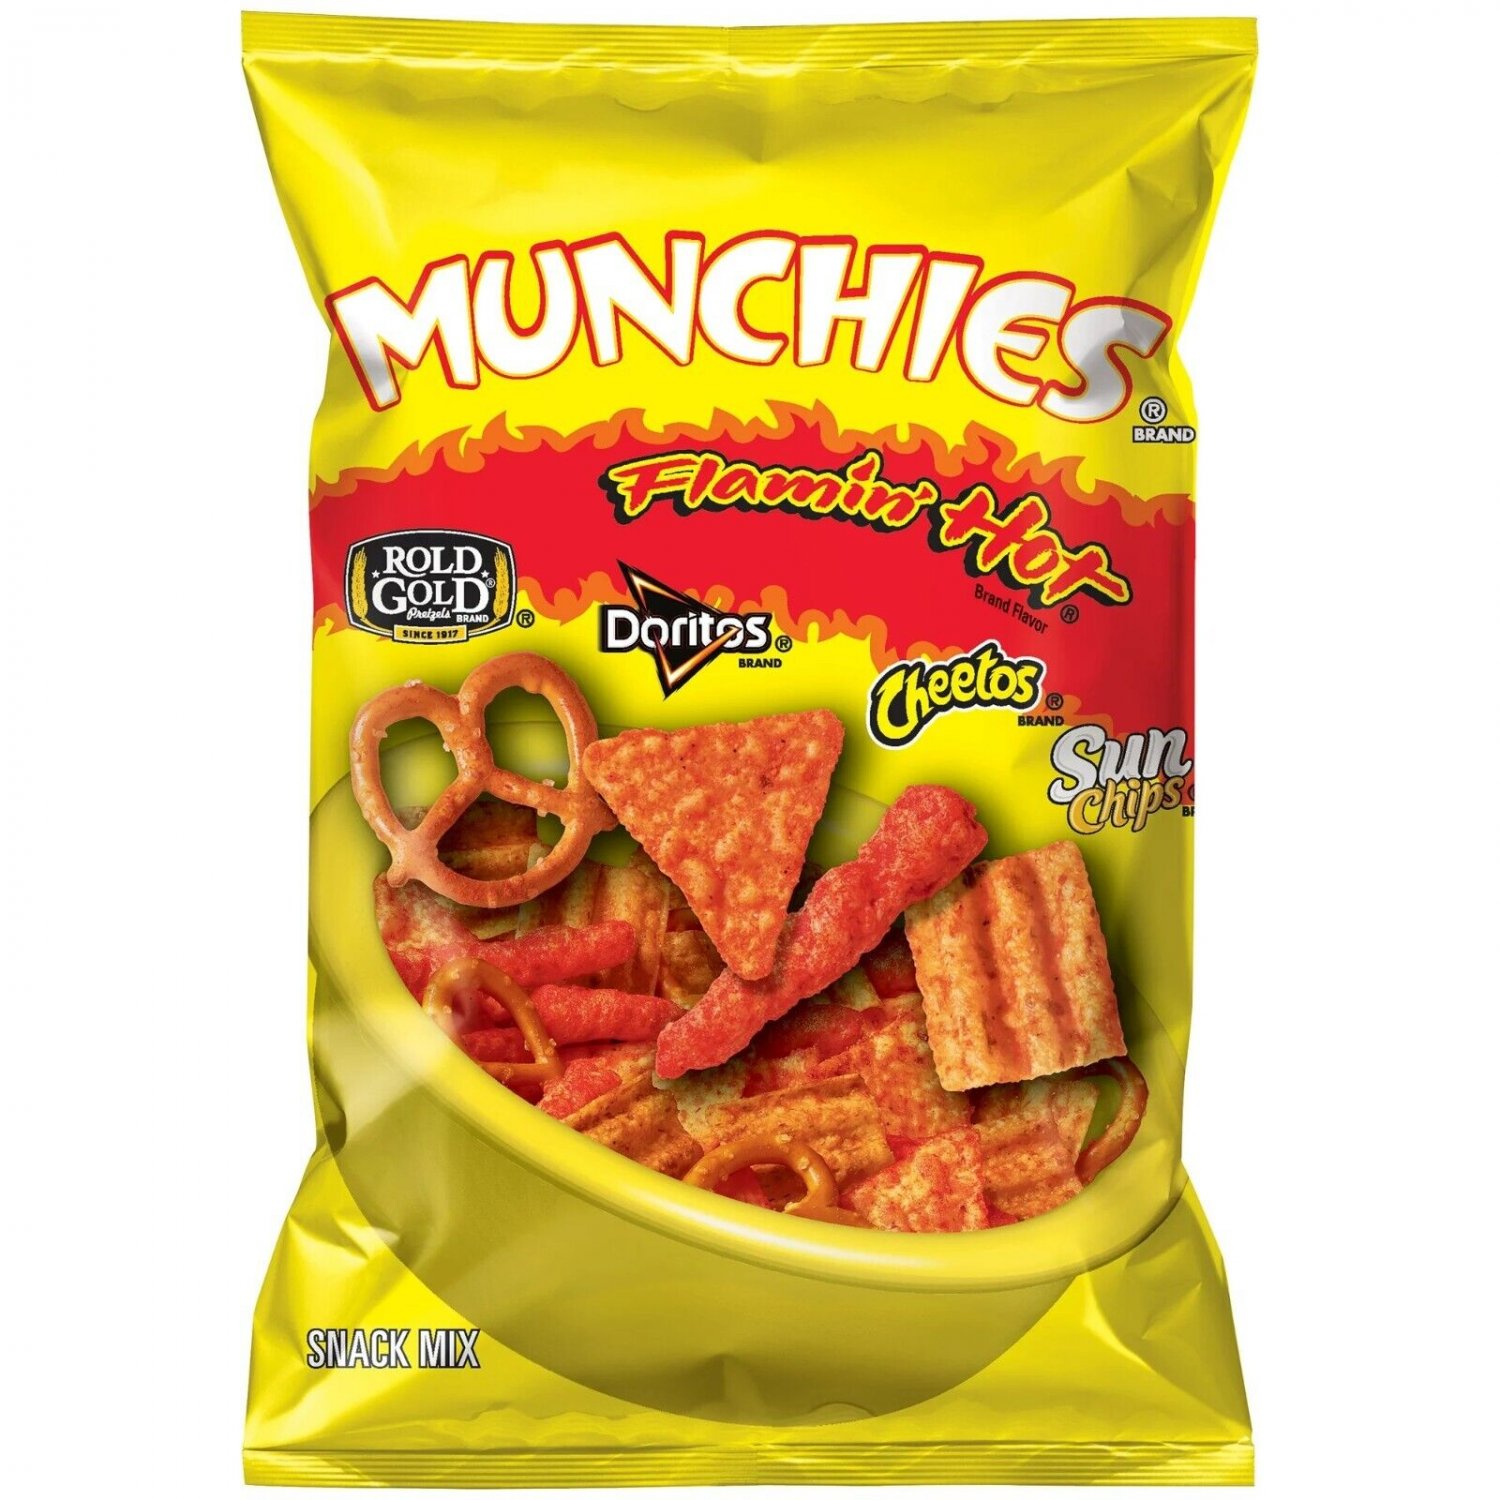 Munchies Flamin Hot Snack Mix Doritos Cheetos Sun Chips Rold Gold 8oz 4 Bags